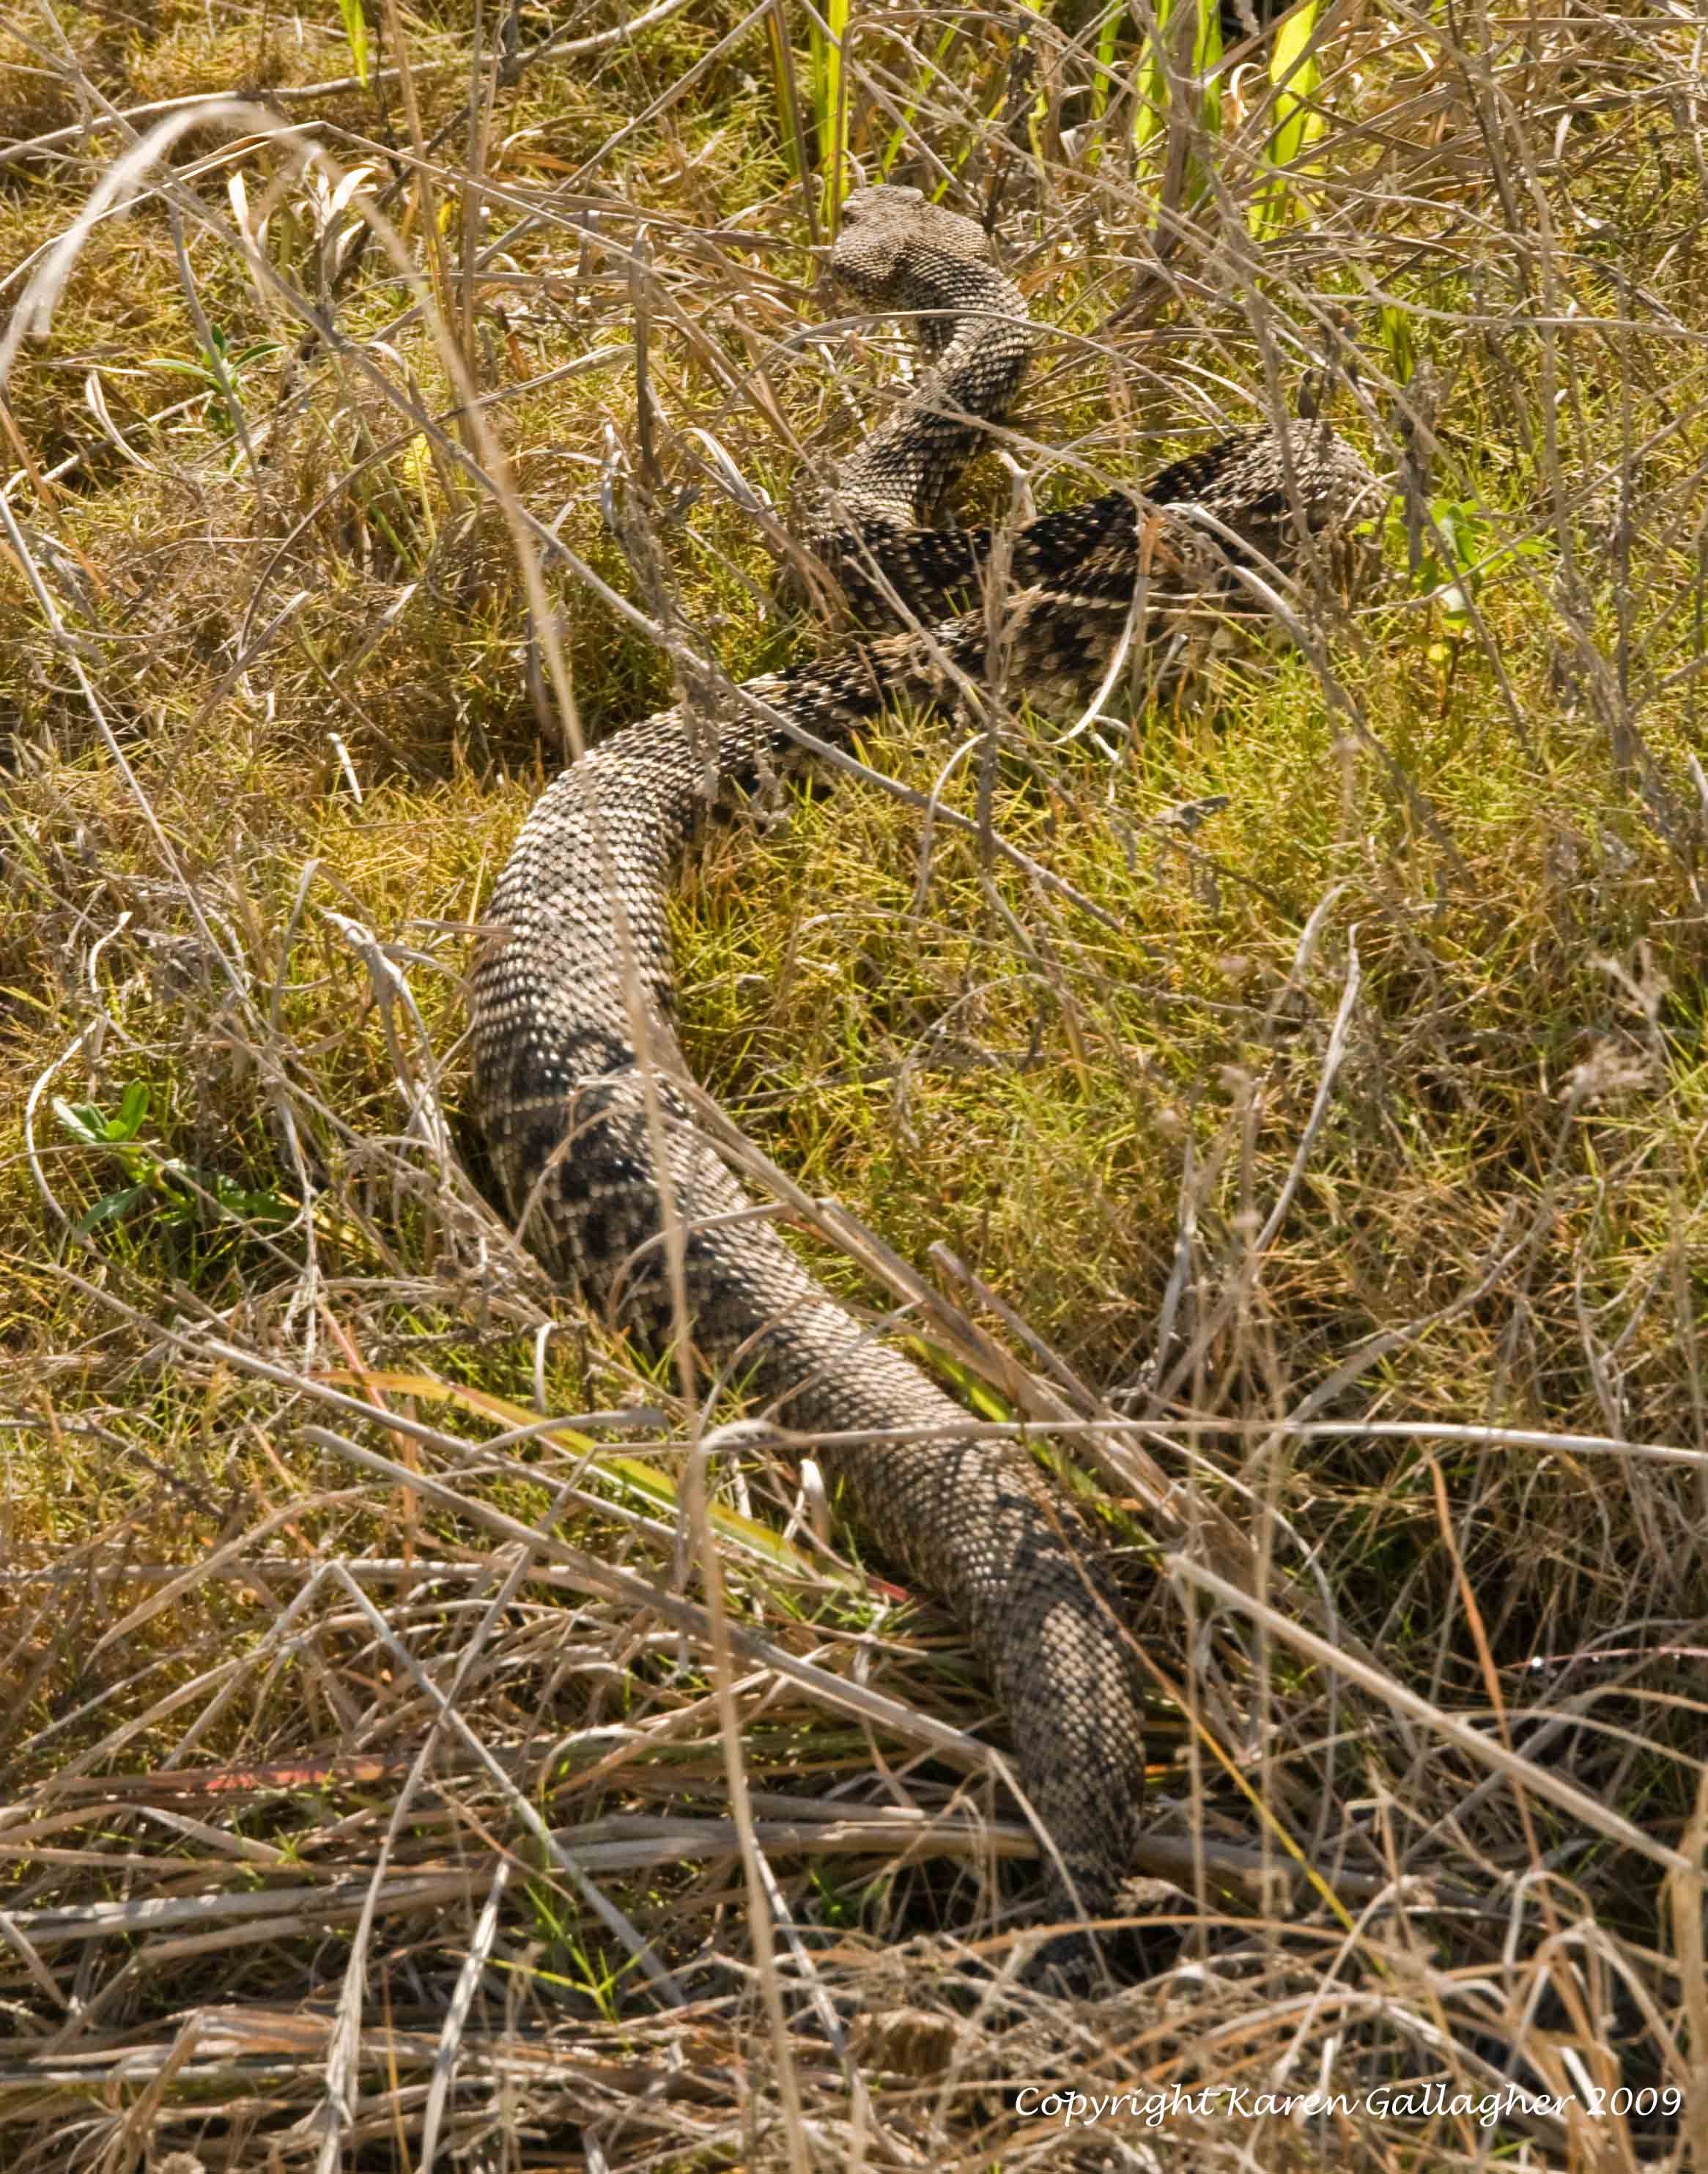 Largest Eastern Diamondback Rattlesnake